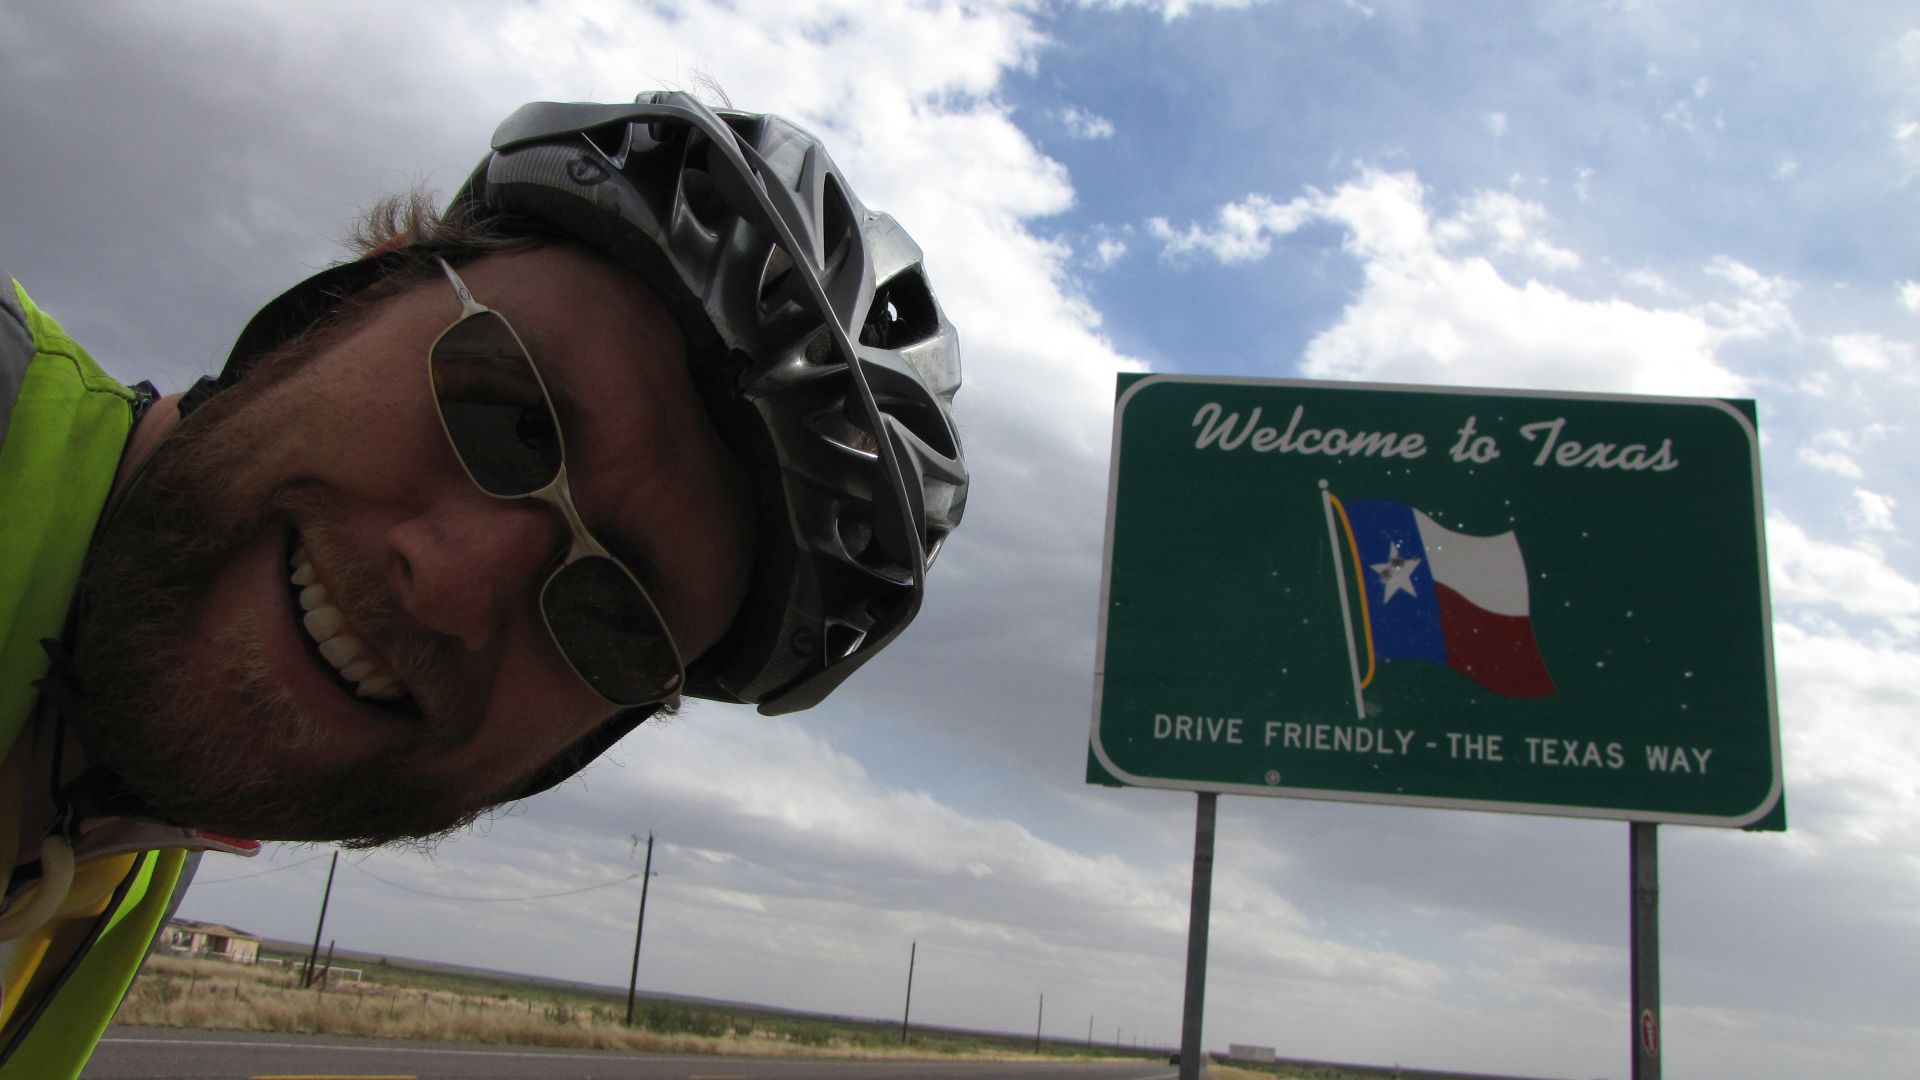 NM-TX border, USA - Y`all say hello to Texas :) Near "Orla"